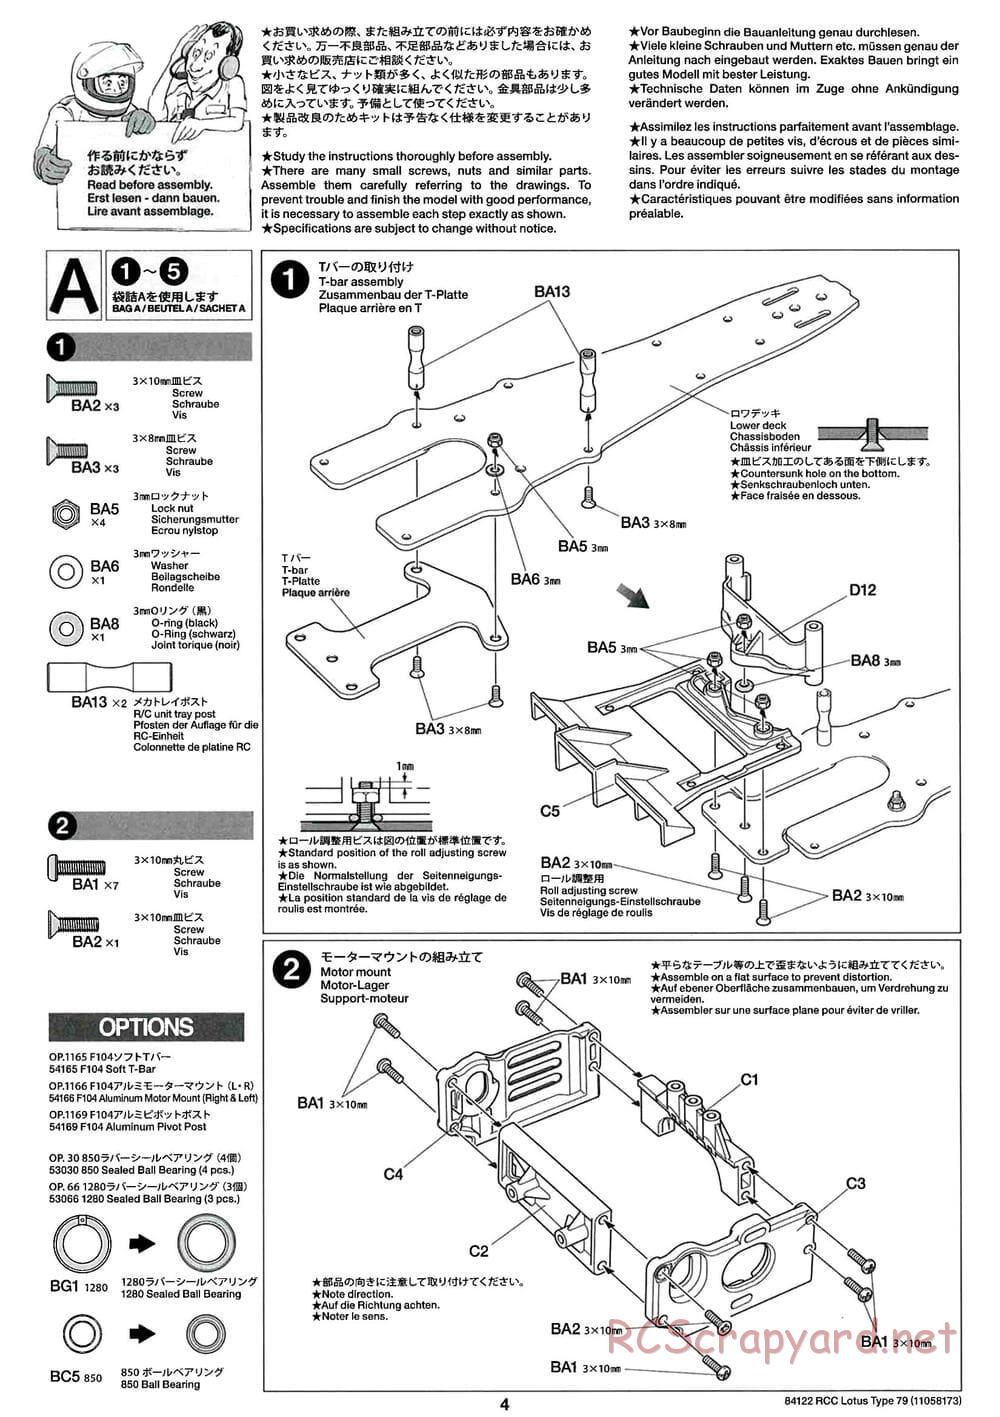 Tamiya - Lotus Type 79 - F104W Chassis - Manual - Page 4